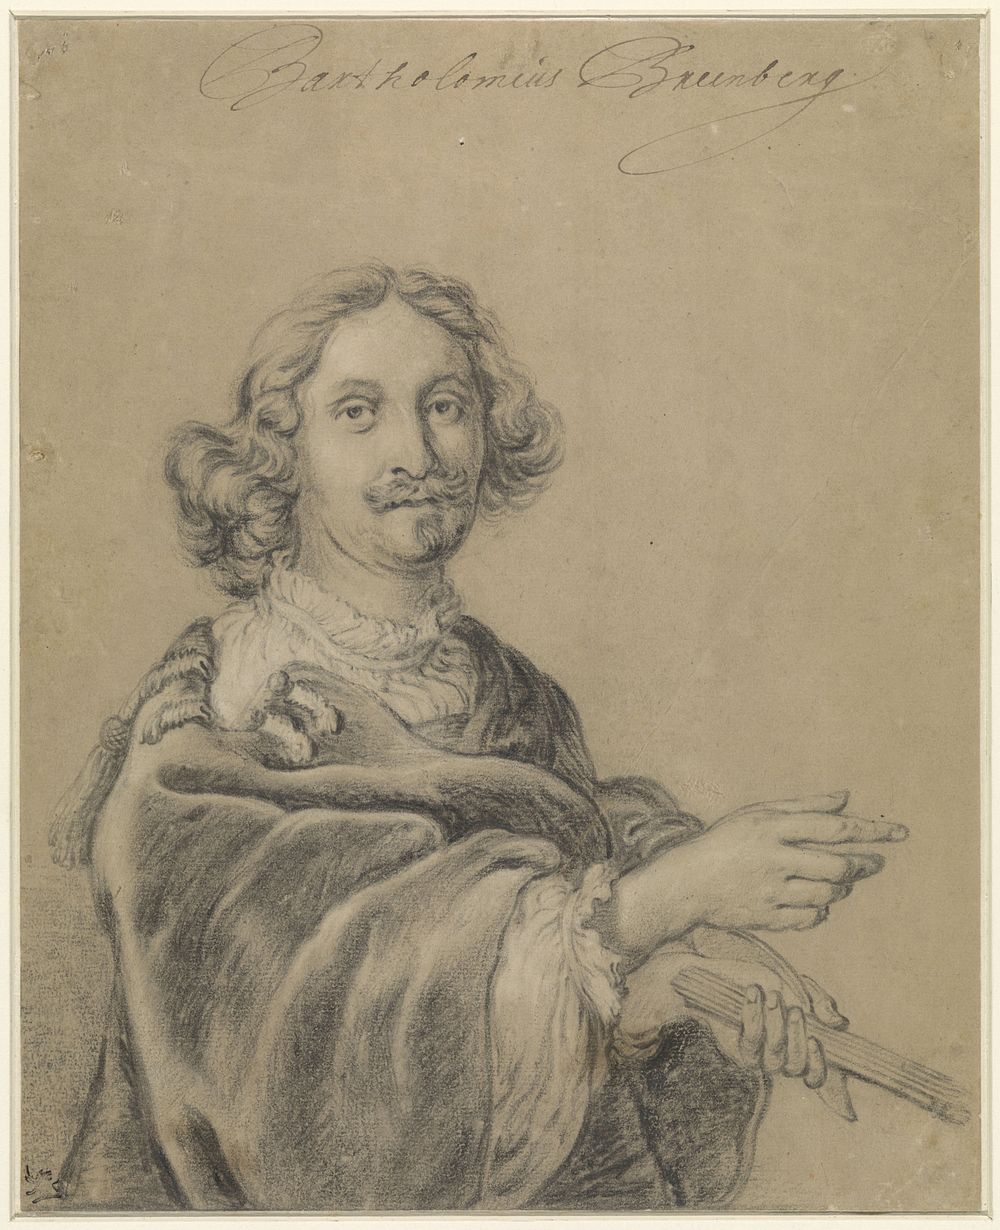 Portret van Bartholomeus Breenbergh (1609 - 1657) by Bartholomeus Breenbergh and Jacob Adriaensz Backer